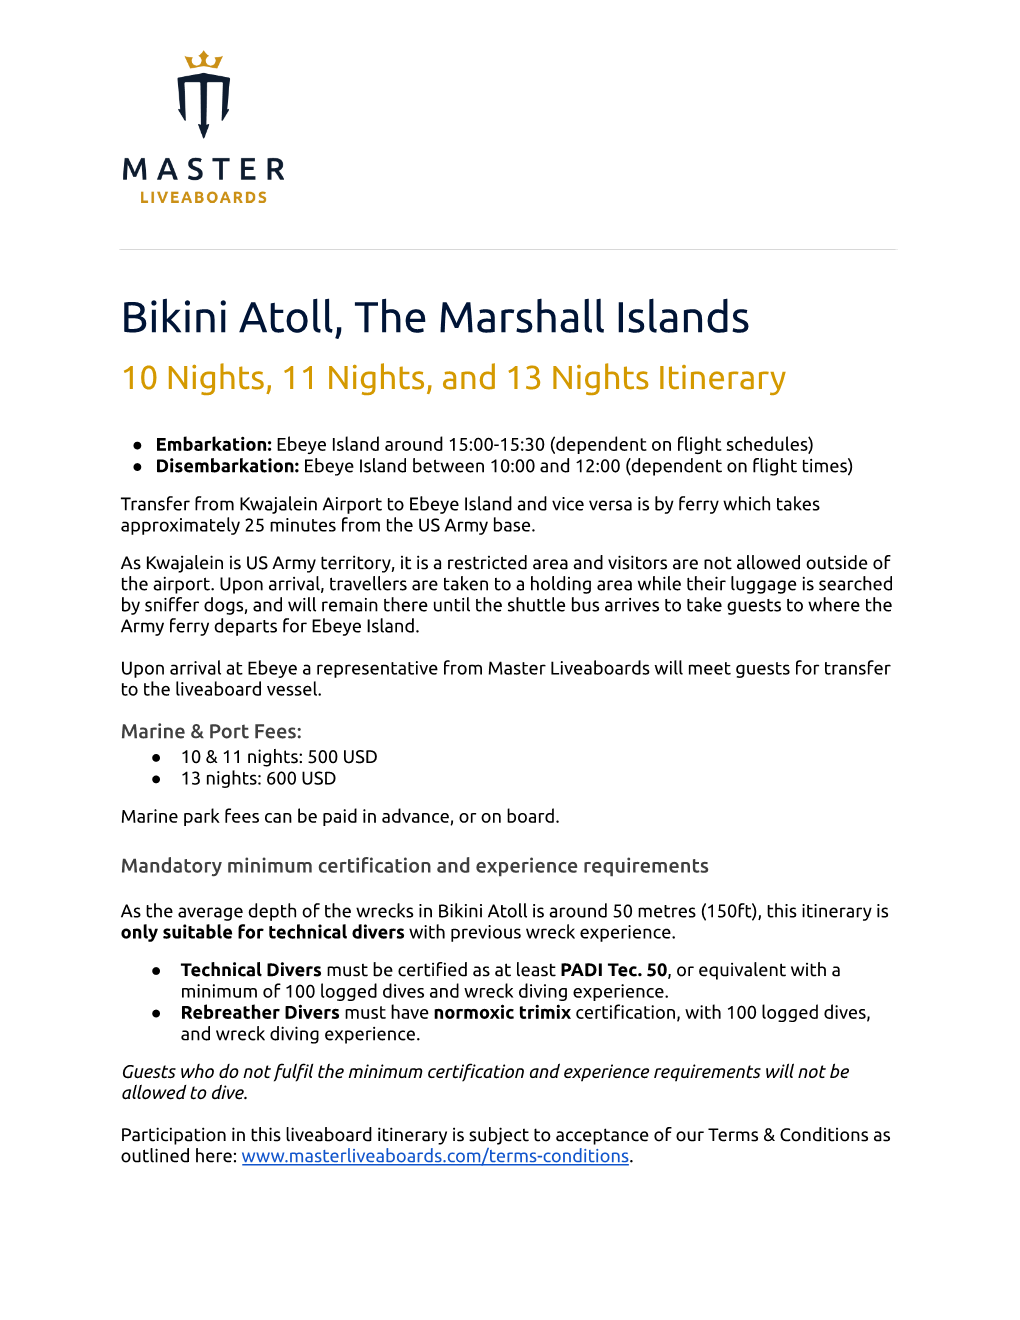 Bikini Atoll, the Marshall Islands 10 Nights, 11 Nights, and 13 Nights Itinerary